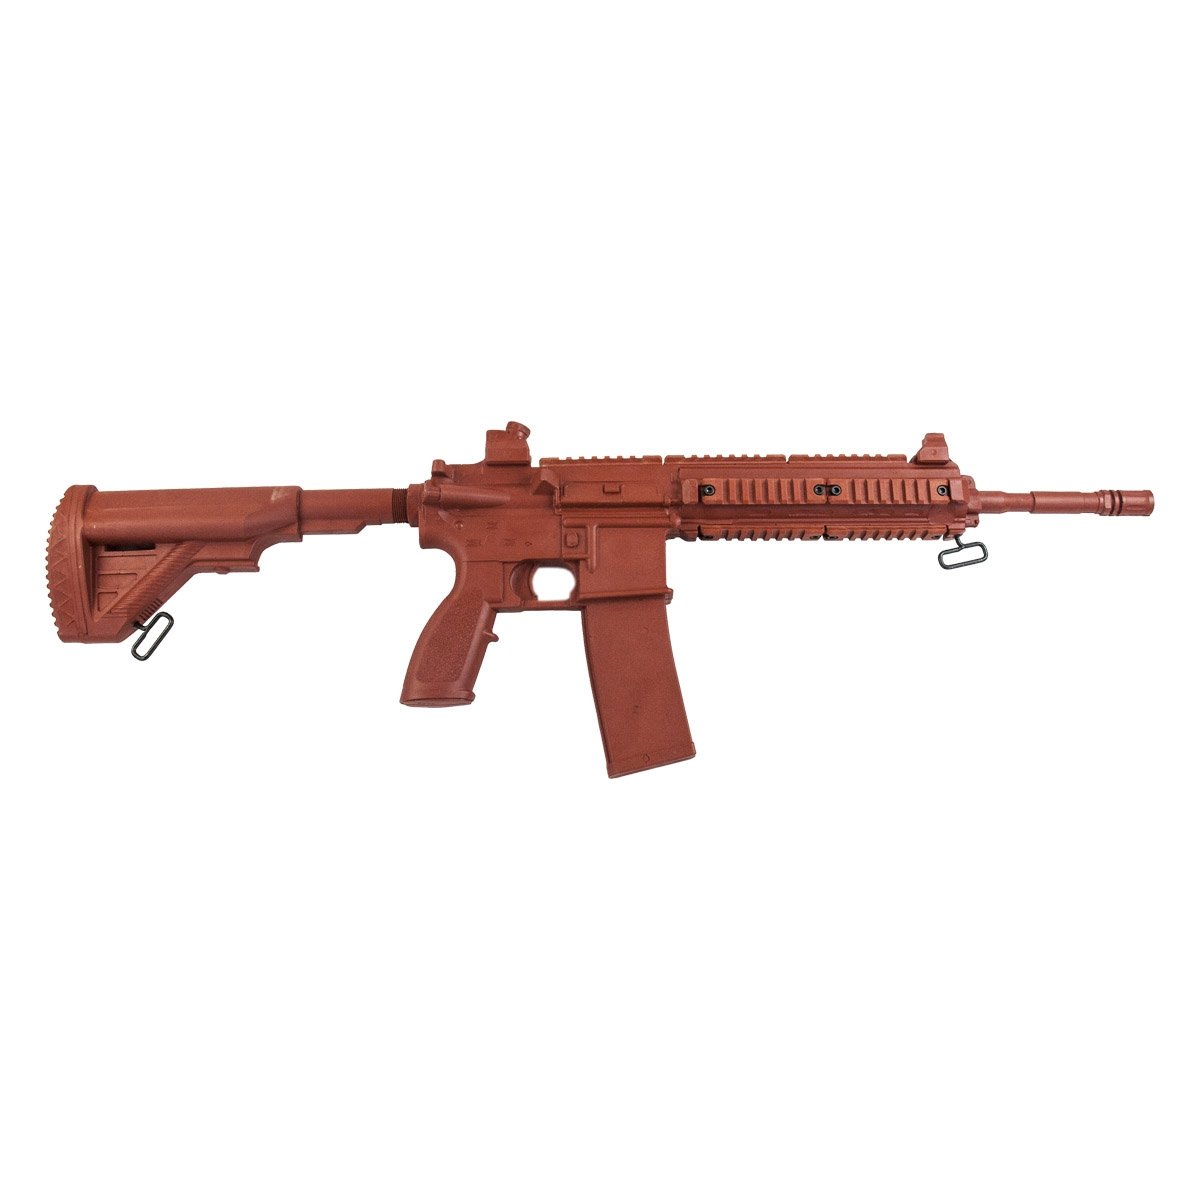 Red Gun HK 416